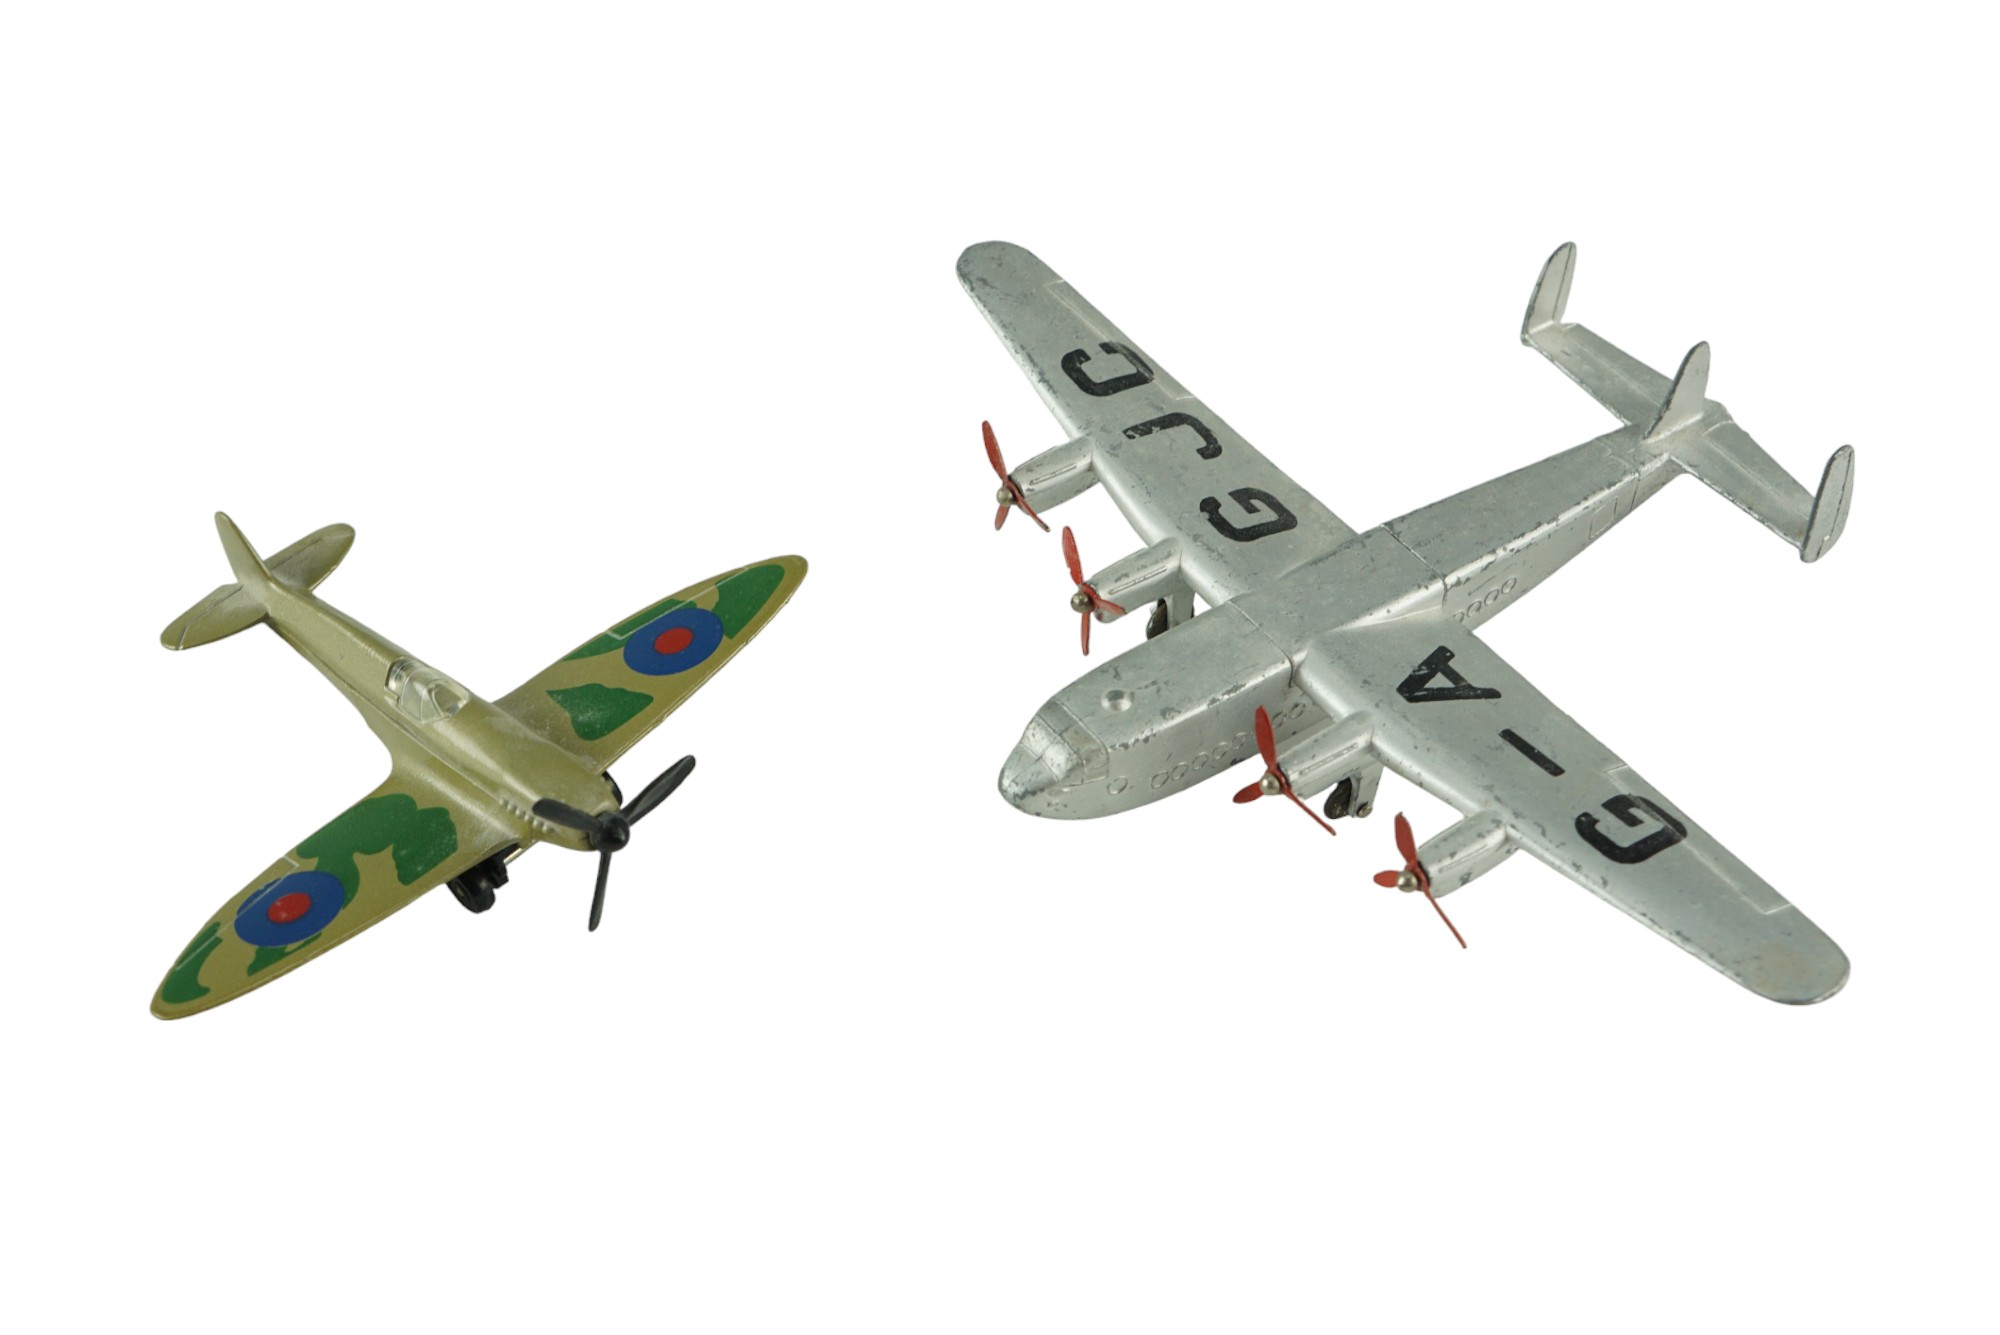 A 1973 Matchbox diecast Spitfire aircraft together with a similar Dinky Toys G-A GJC passenger